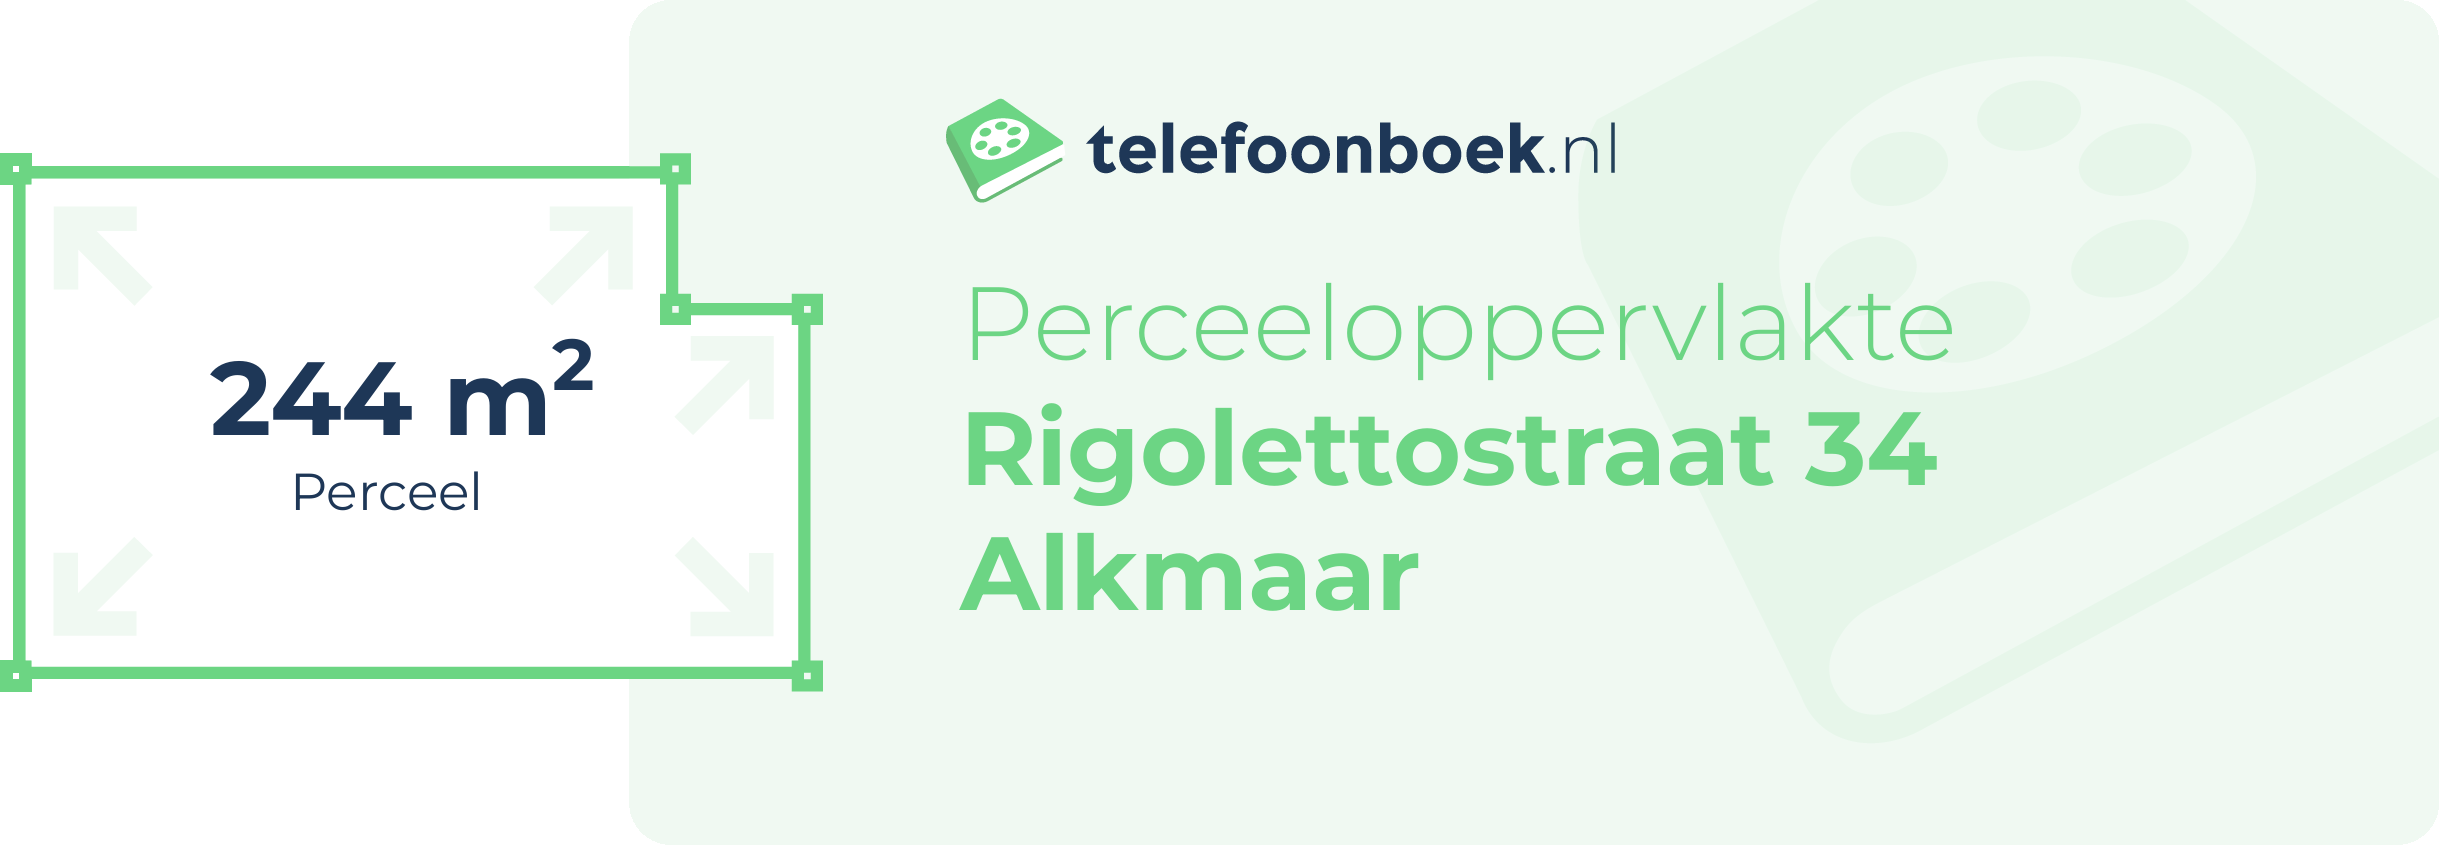 Perceeloppervlakte Rigolettostraat 34 Alkmaar